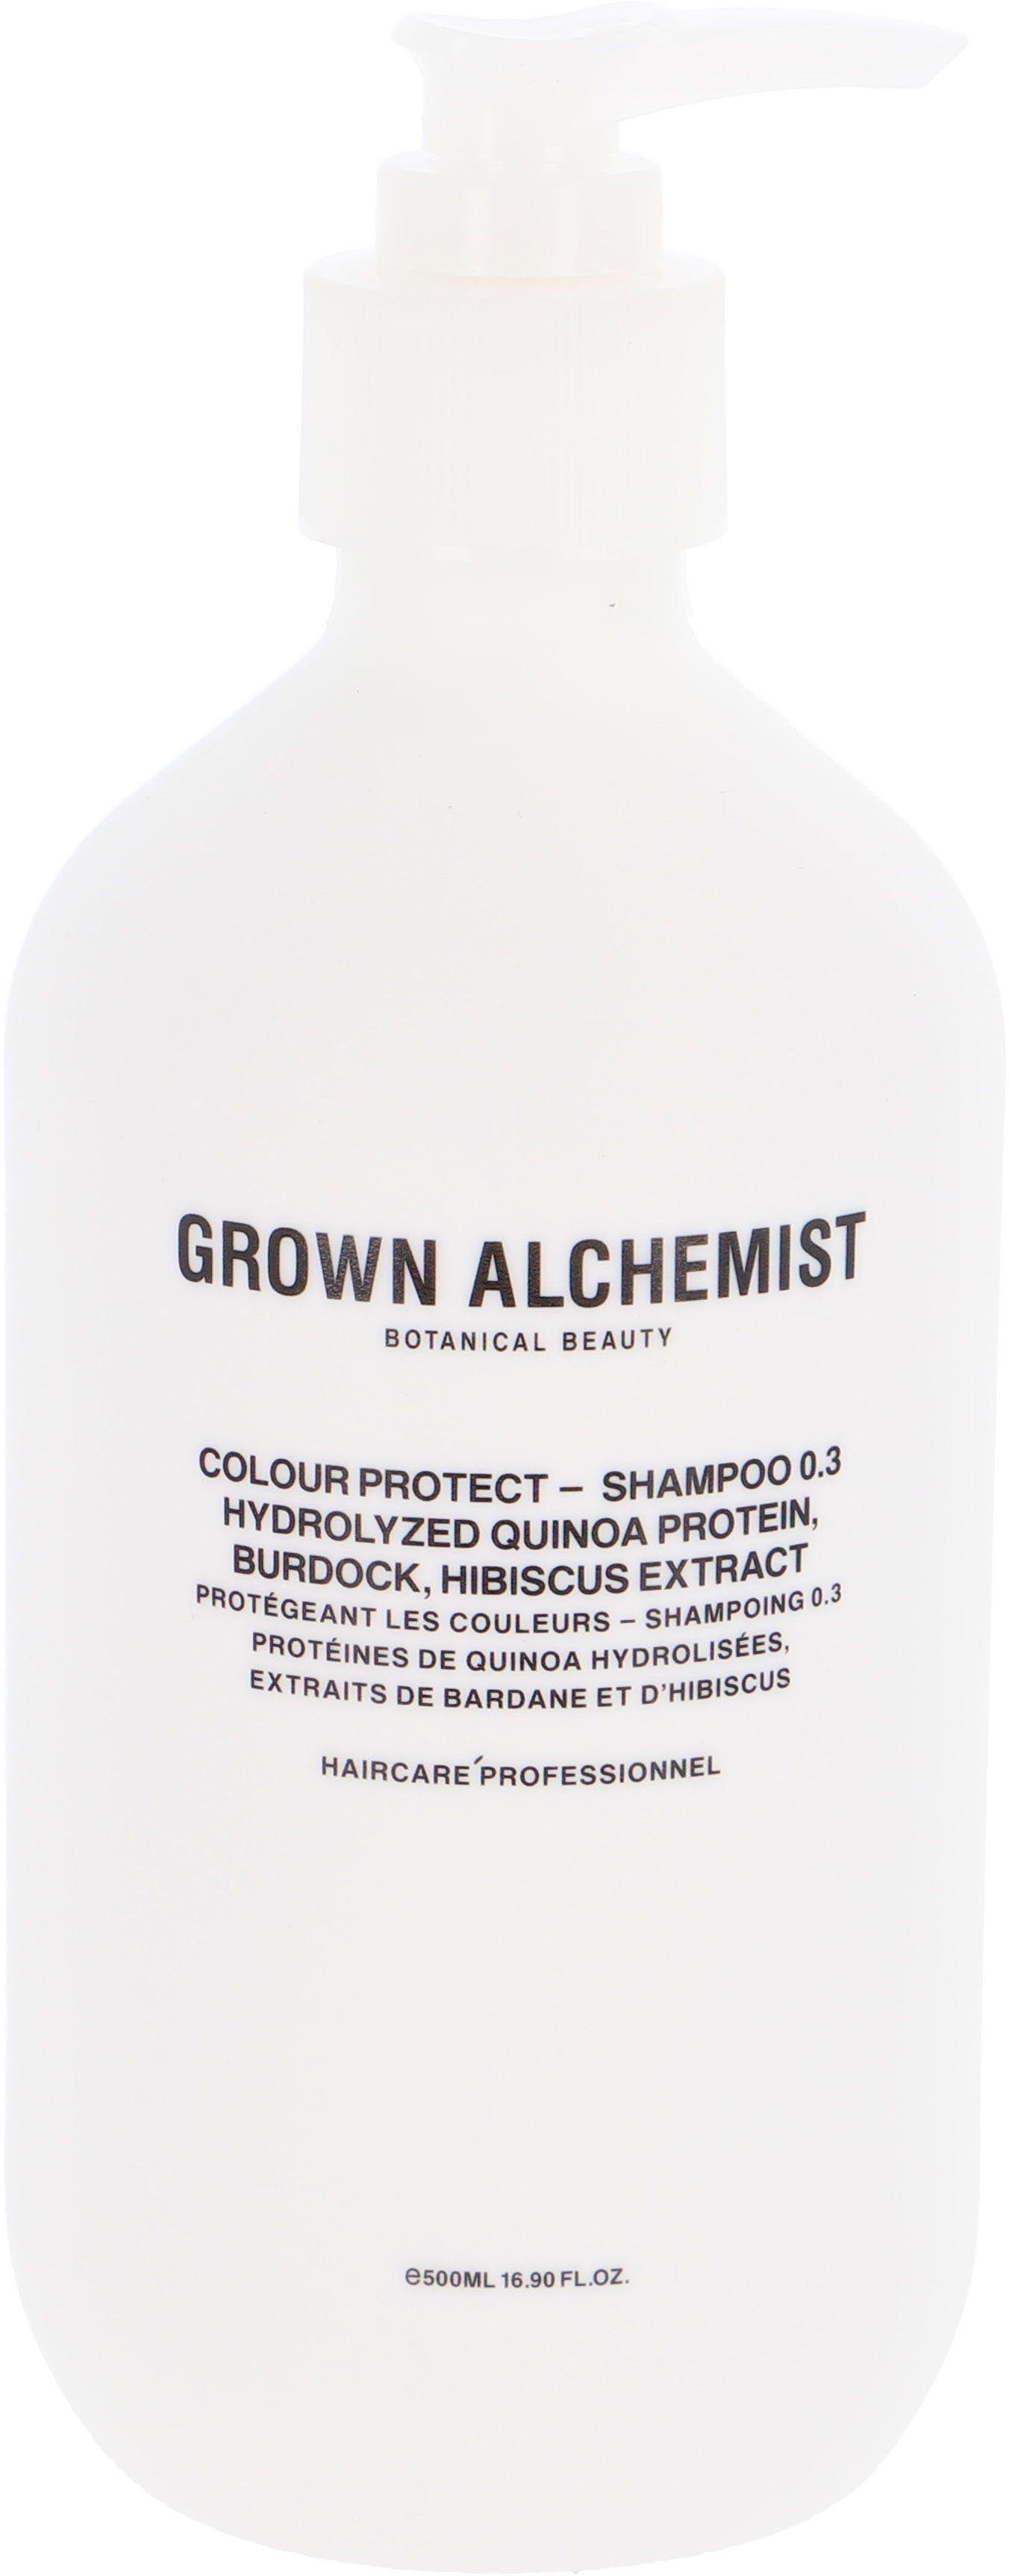 ALCHEMIST Haarshampoo Burdock, Extract Protein, GROWN Protect Colour Hibiscus Hydrolyzed Quinoa - 0.3, Shampoo